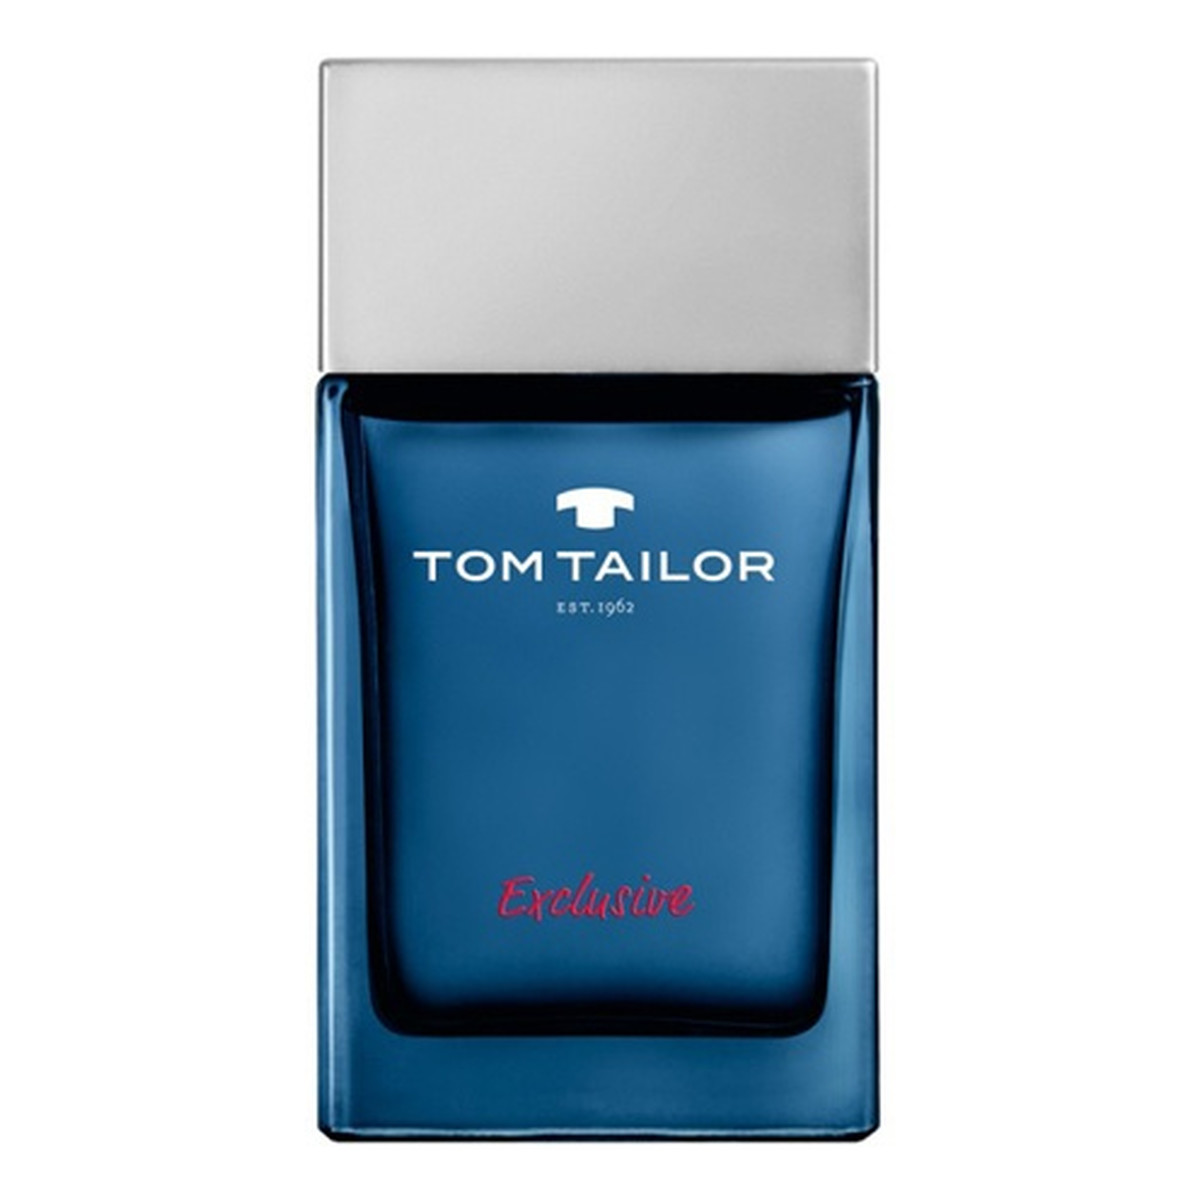 Tom Tailor Man Exclusive Woda toaletowa 50ml